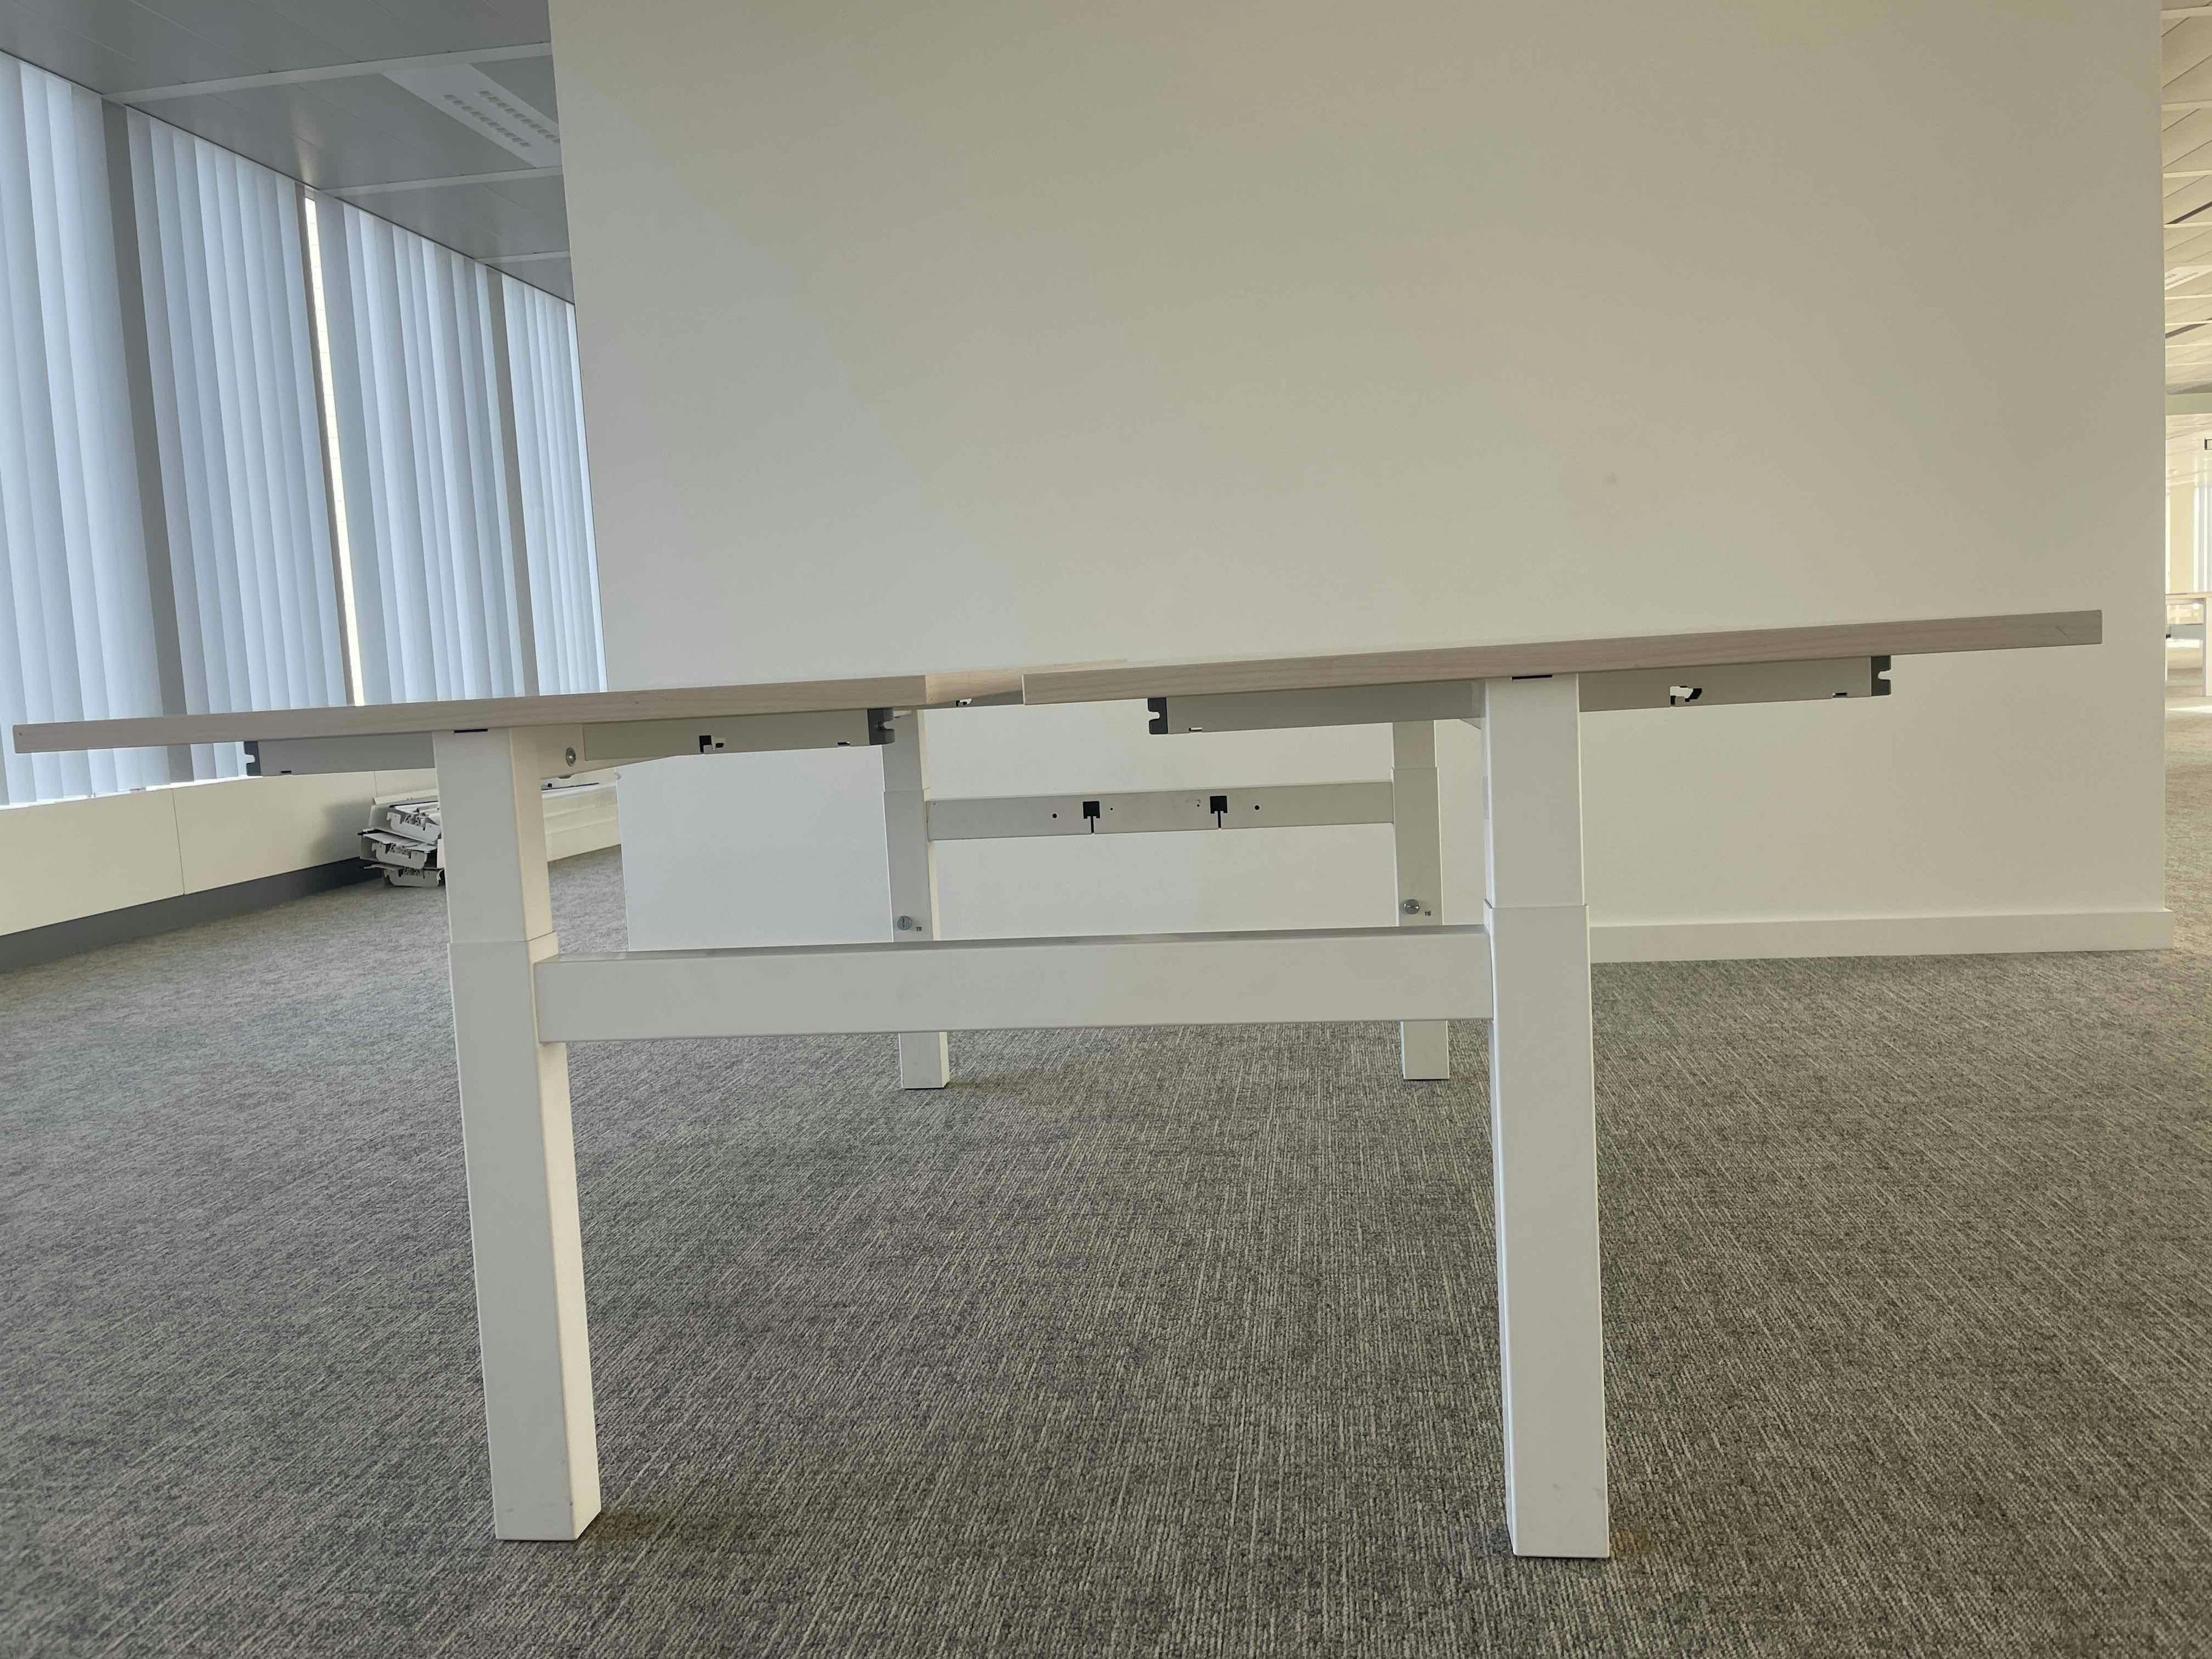 PREMIUM Bureau Duo - 160cm (MARKANT) - Second hand quality "Desks" - Relieve Furniture - 2